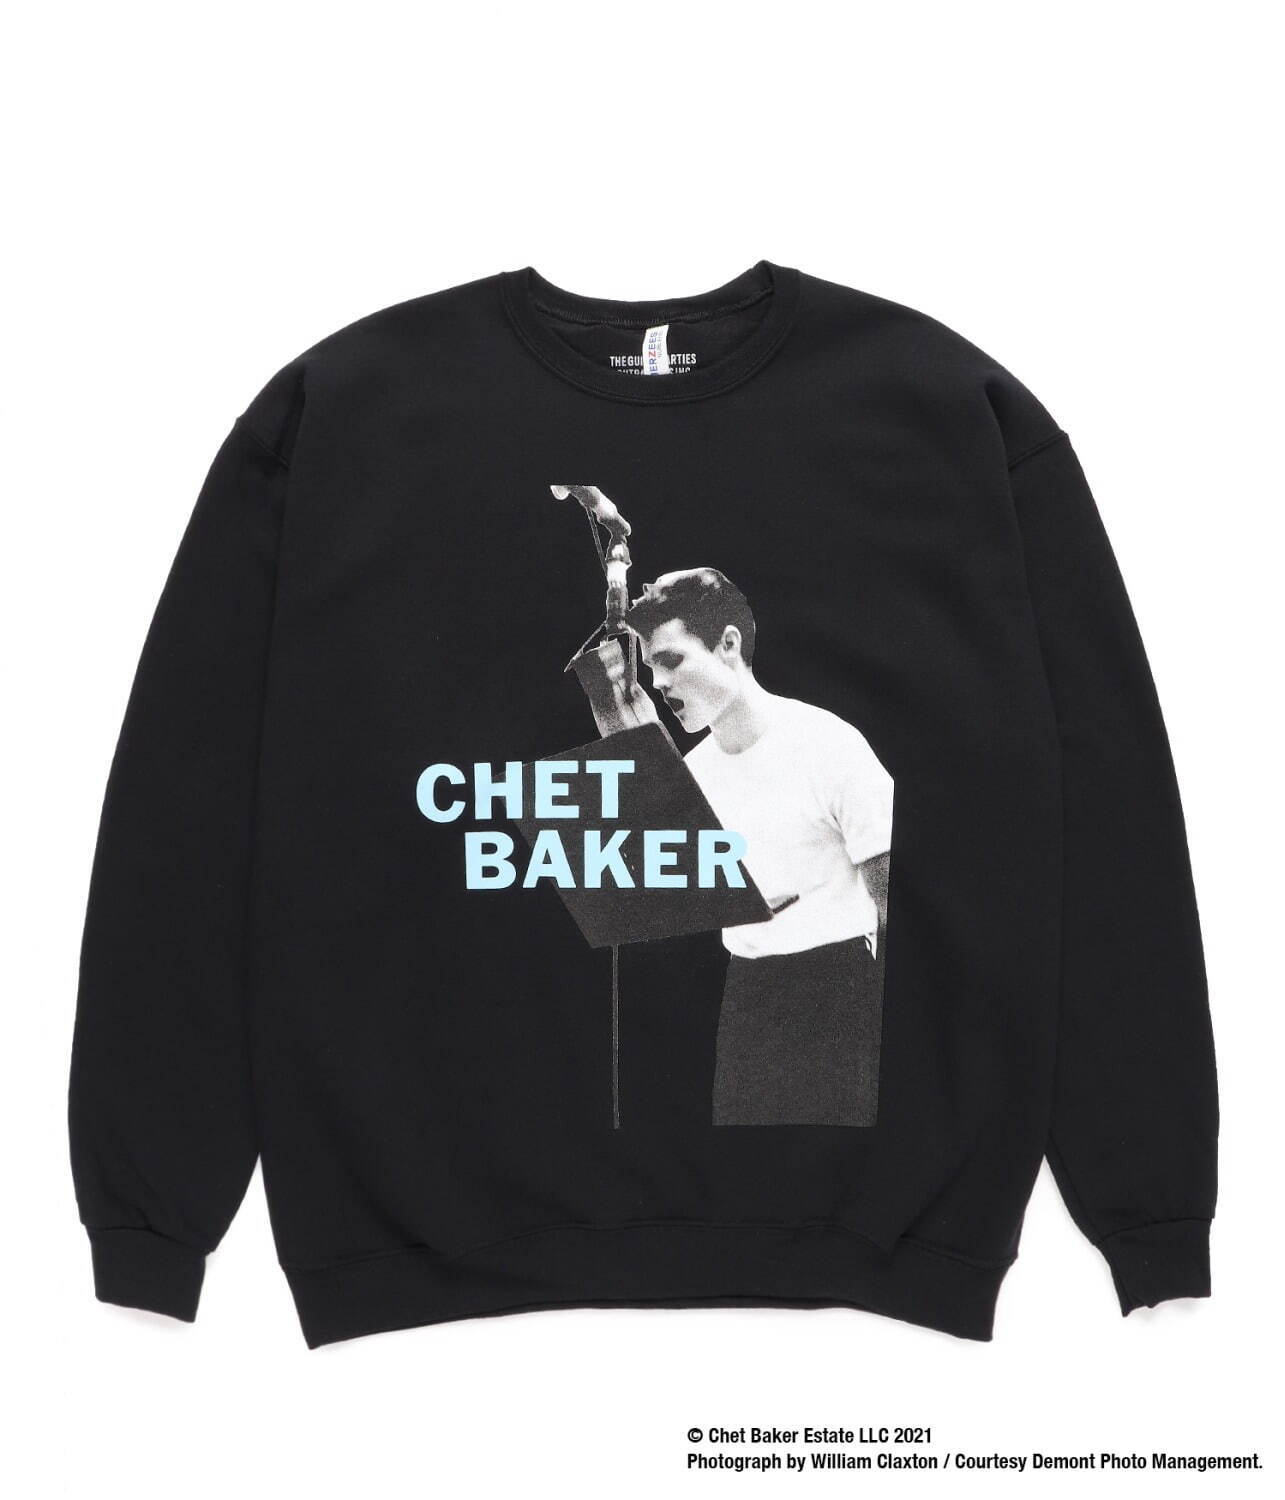 CHET BAKER /CREW NECK SWEAT SHIRT 17,600円